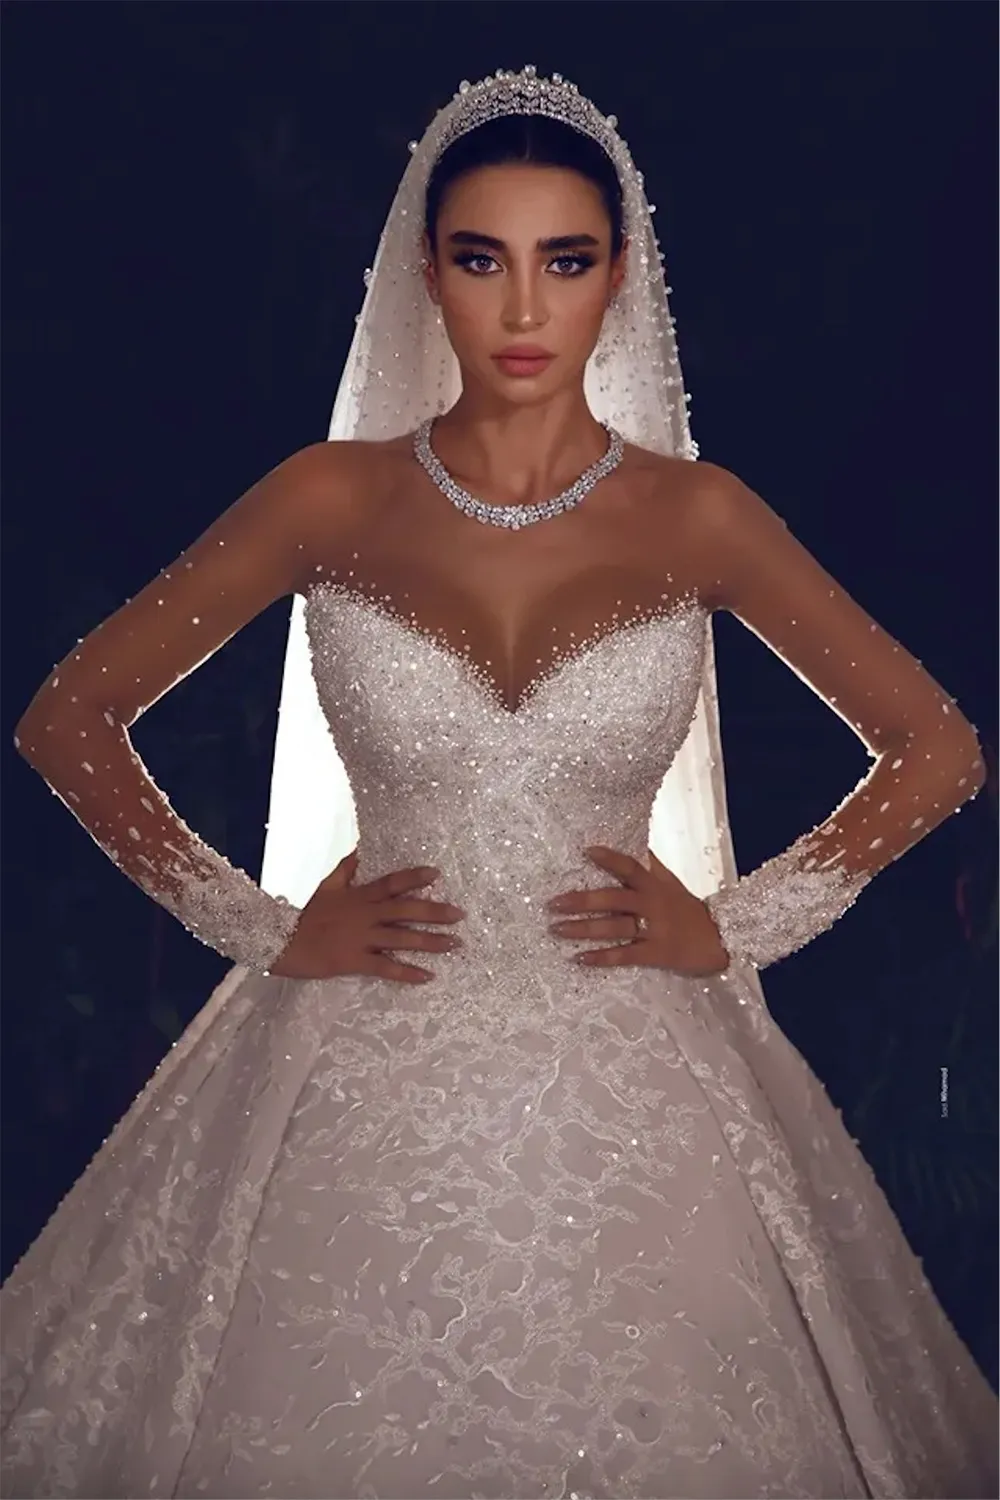 Arabic Vintage Wedding Dresses Crystals Sheer Long Sleeve Lace Beaded Ball Gown vestido de novia Bridal Dress